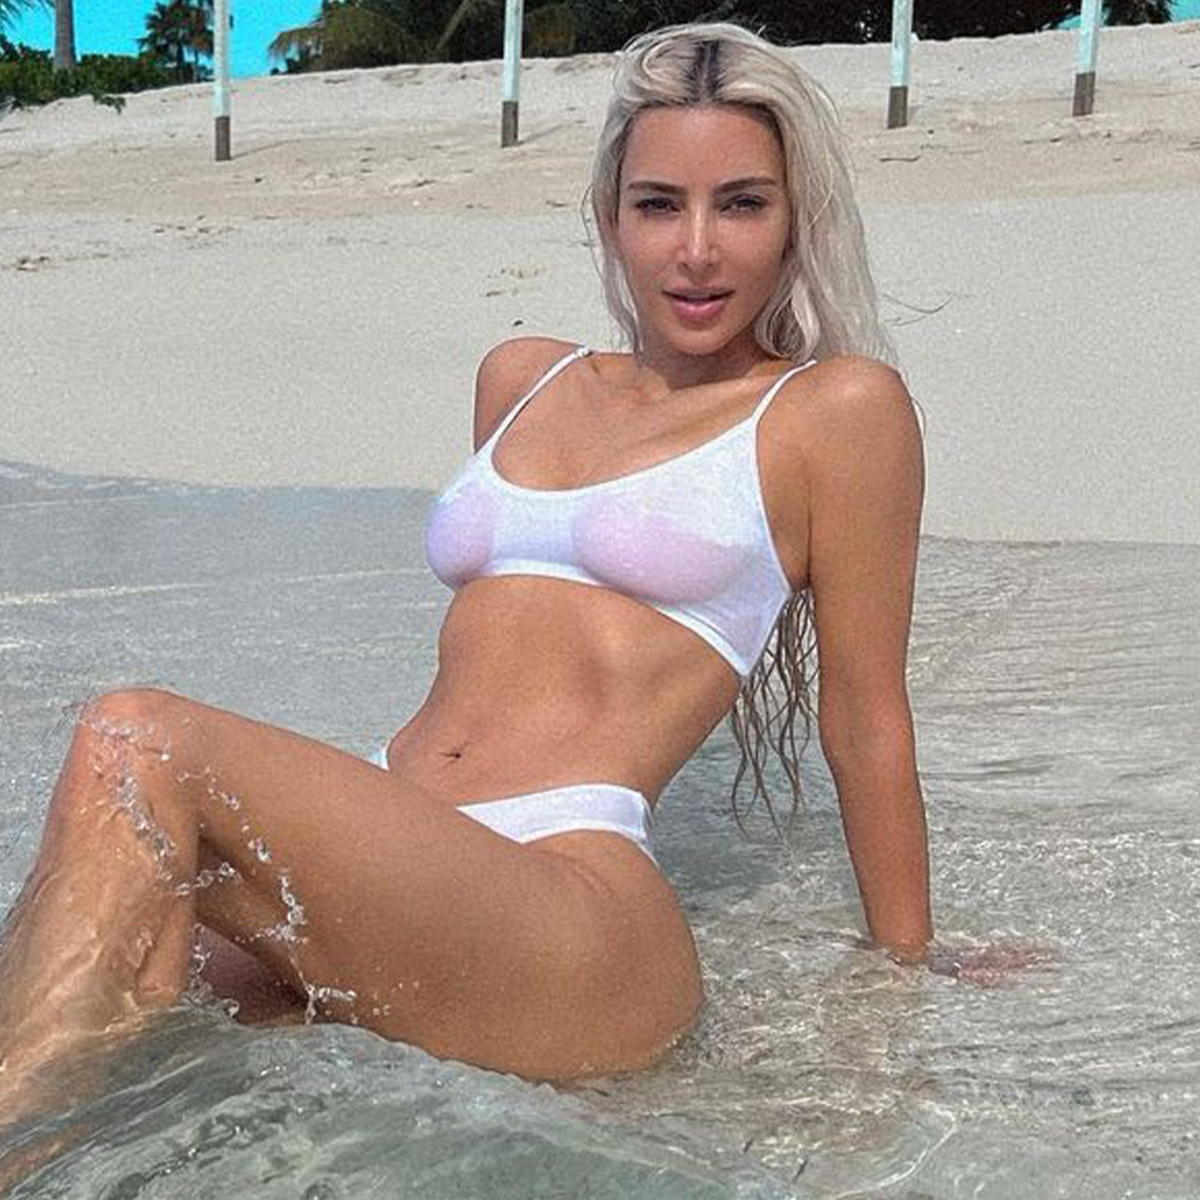 Kim Kardashian Shows Some SKKN in White Bikini During Beach Vacation – E! Online